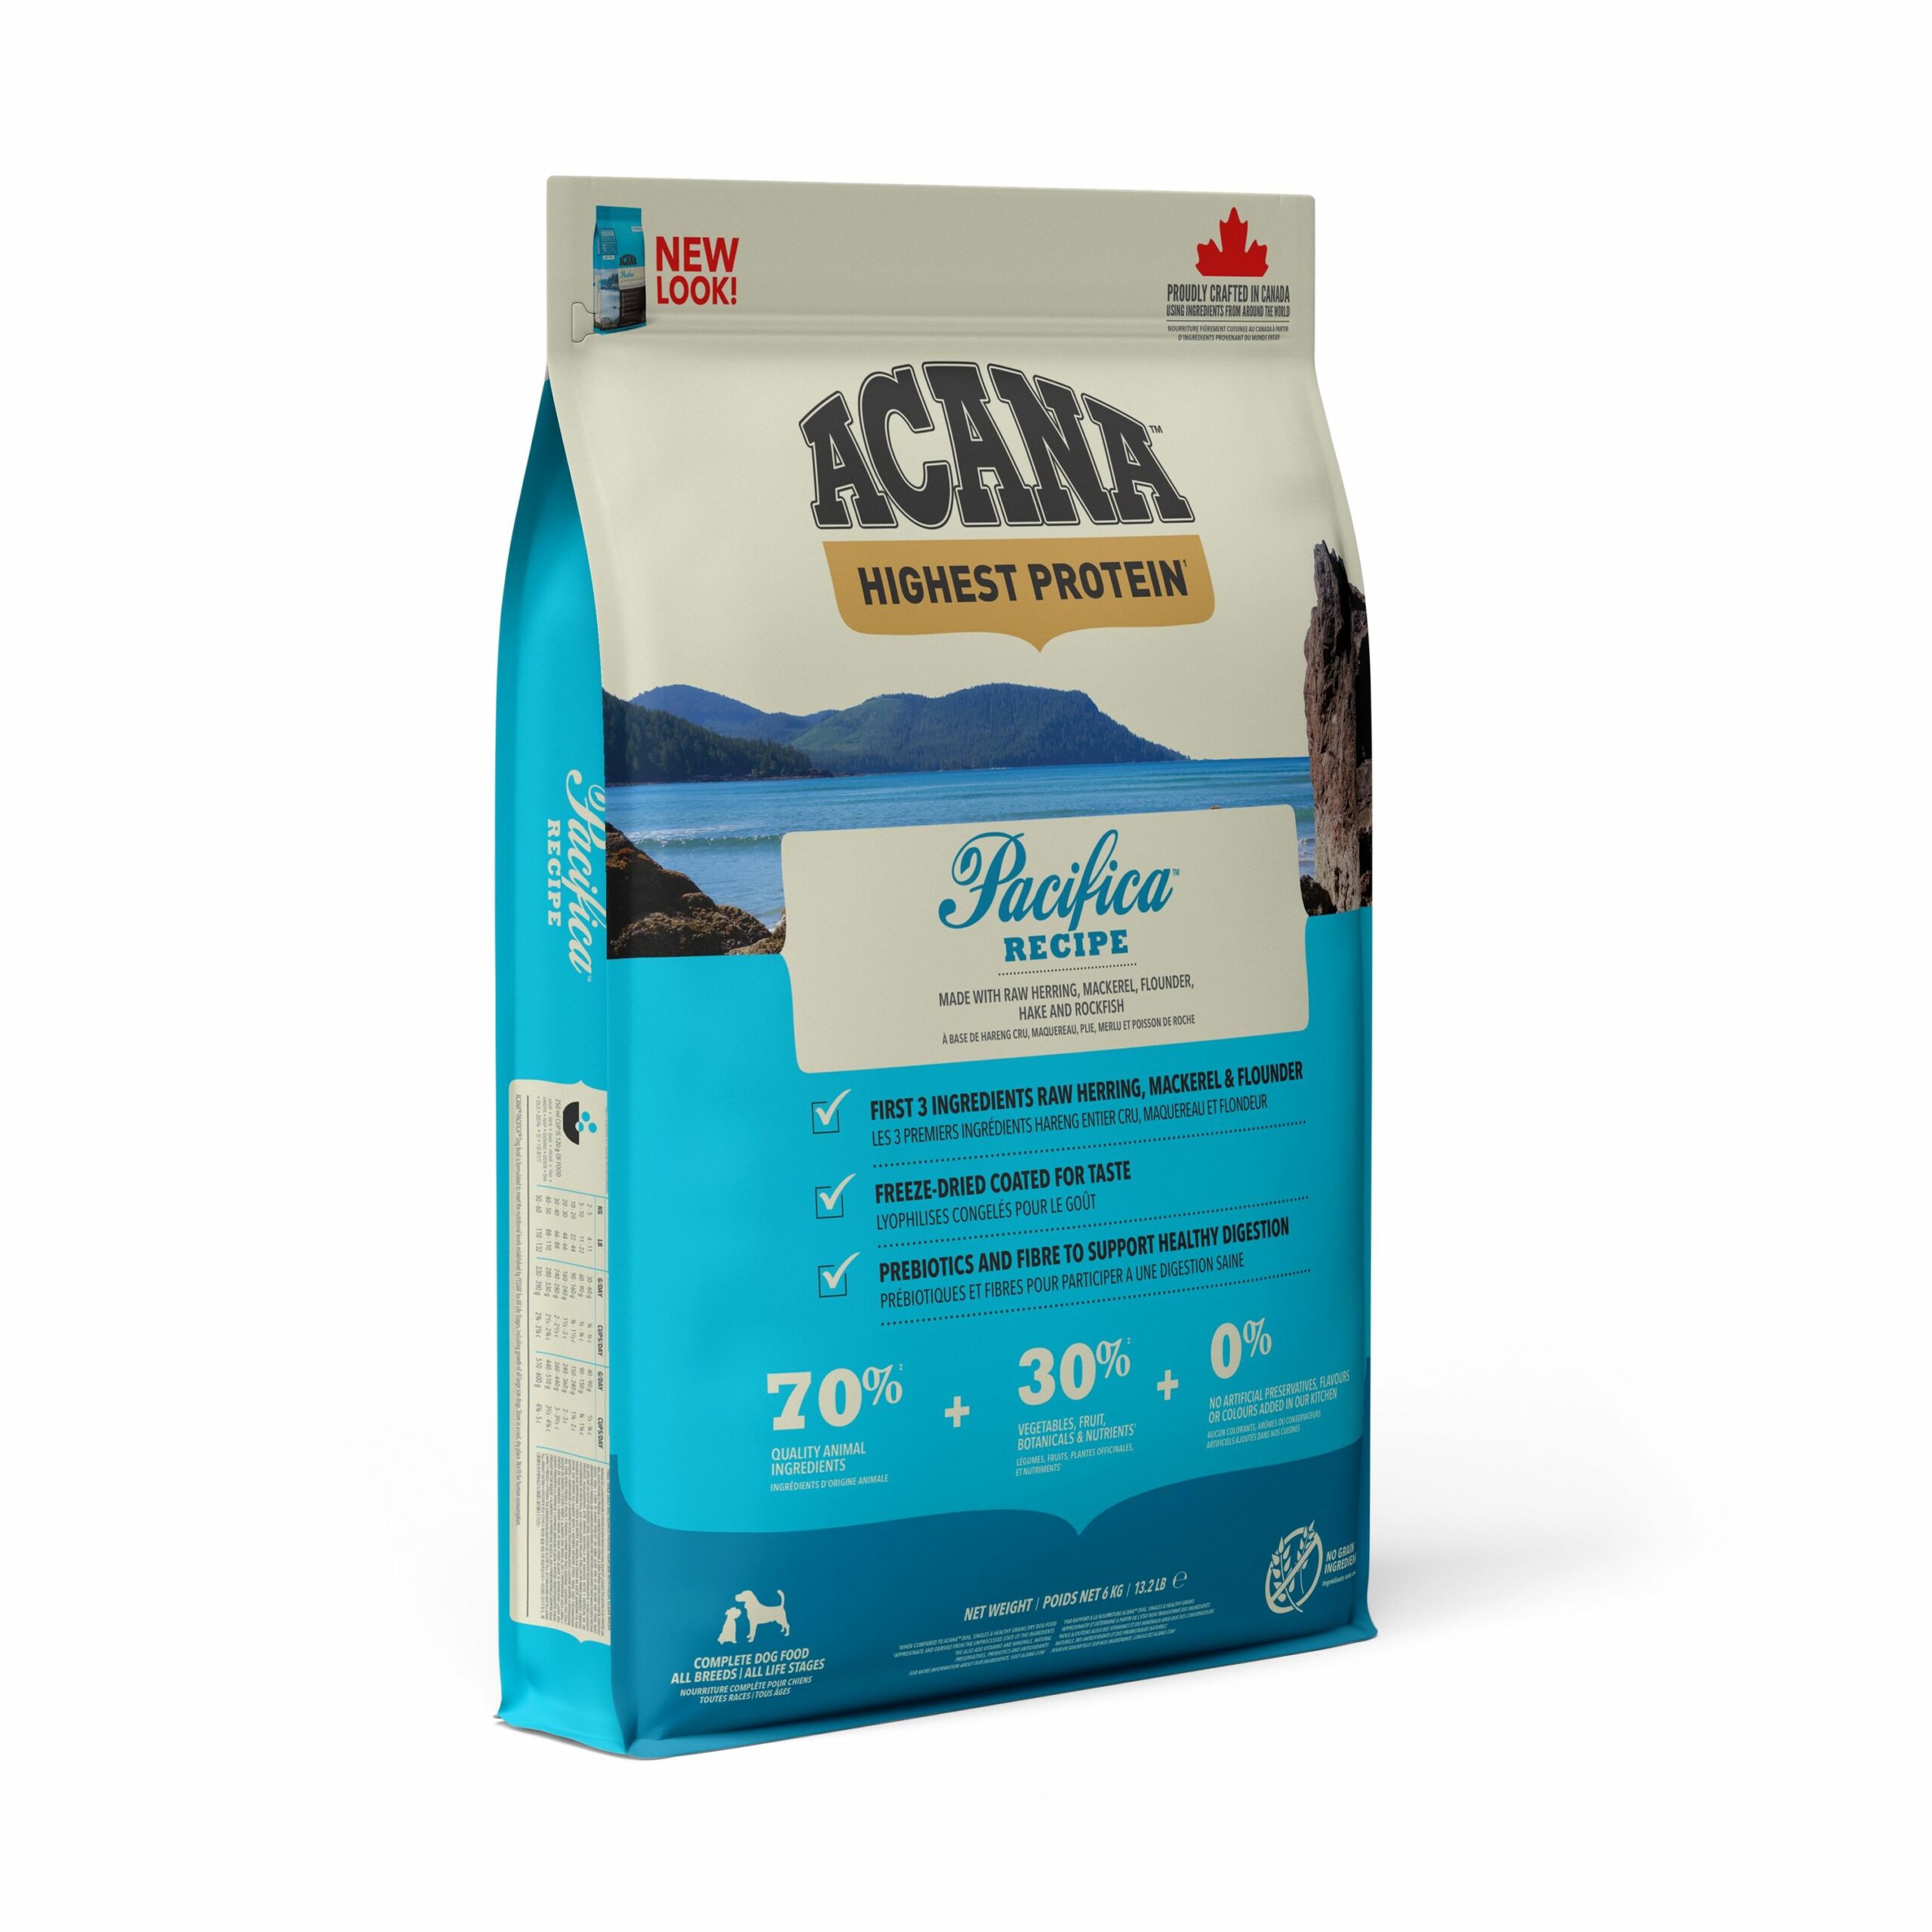 Acana Premium Dog Food scaled